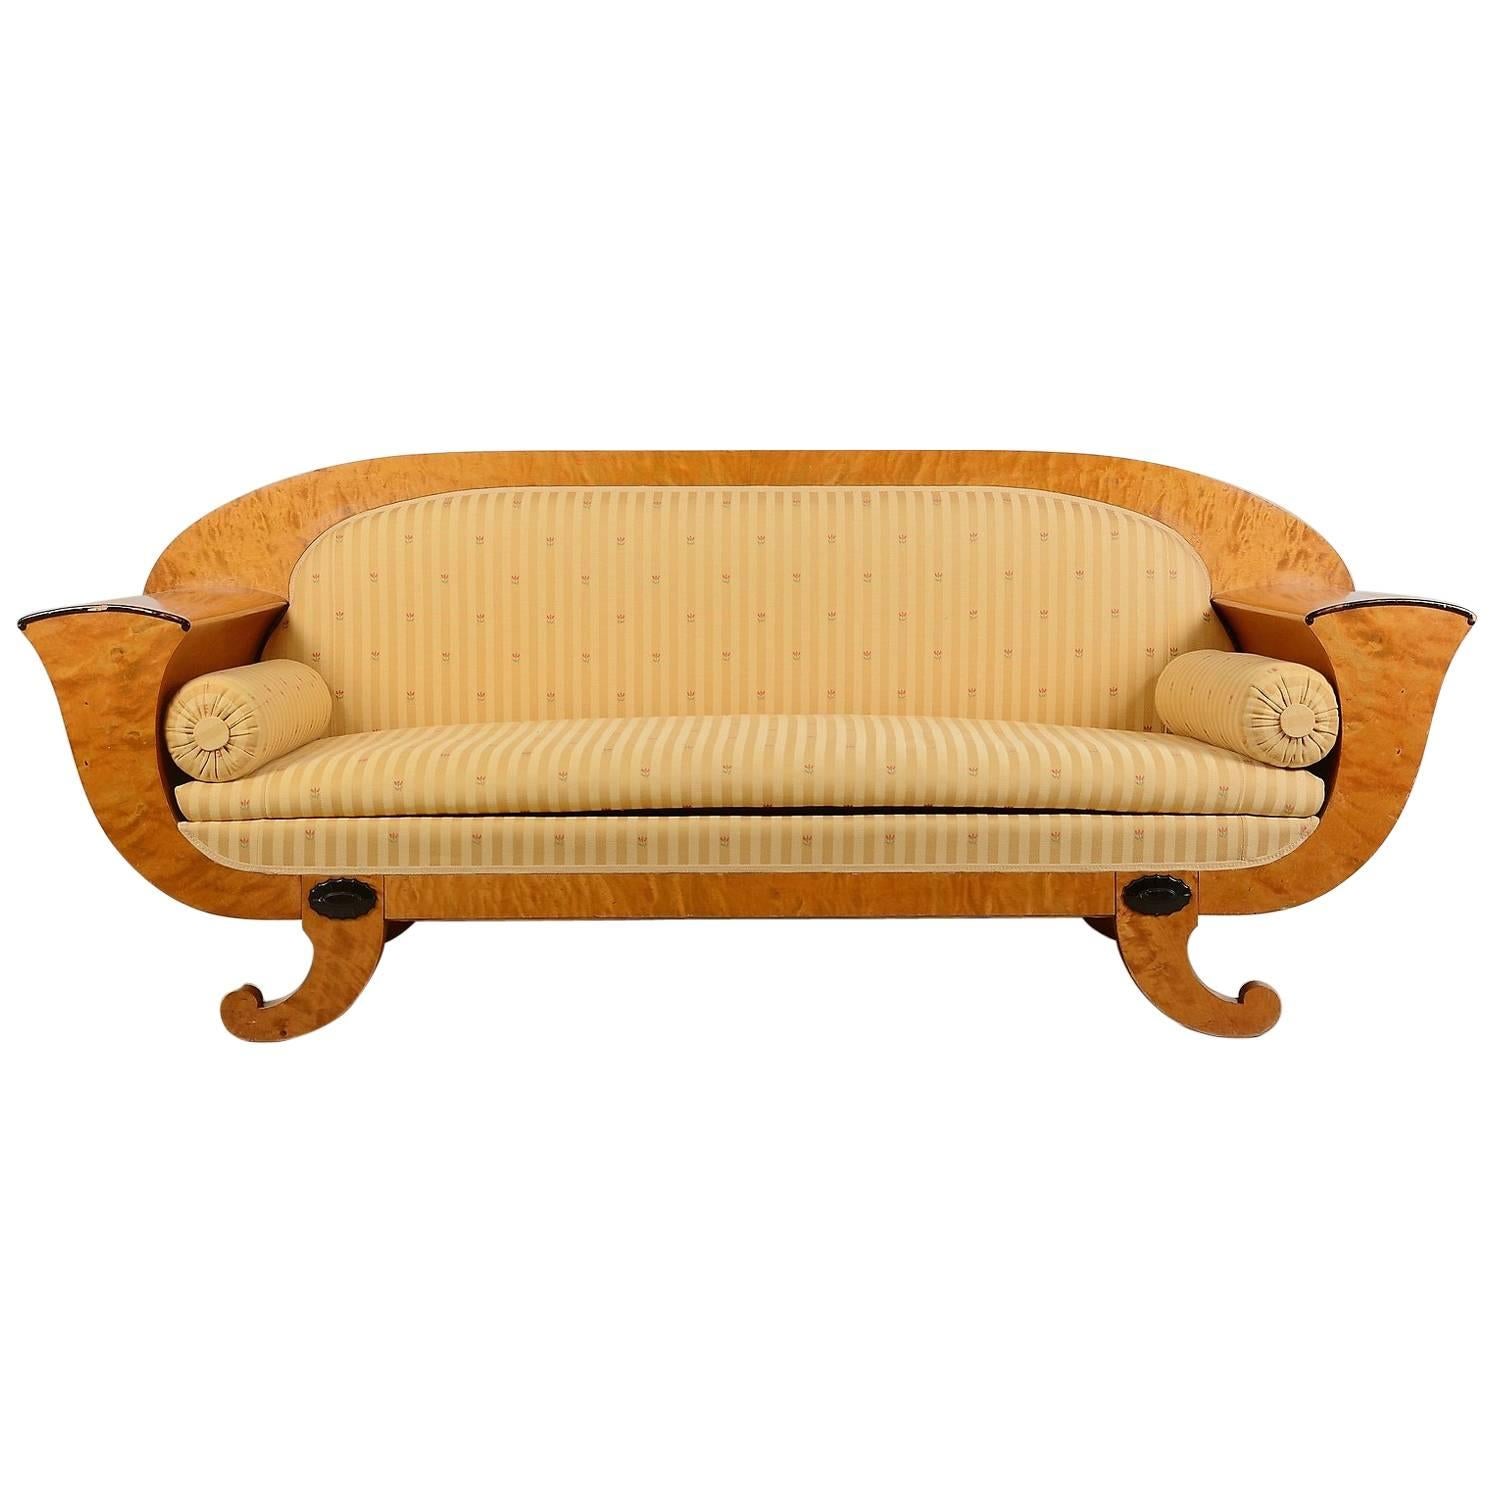 Swedish Biedermeier Sofa Empire Couch Golden Birch Honey Colour, 19th Century